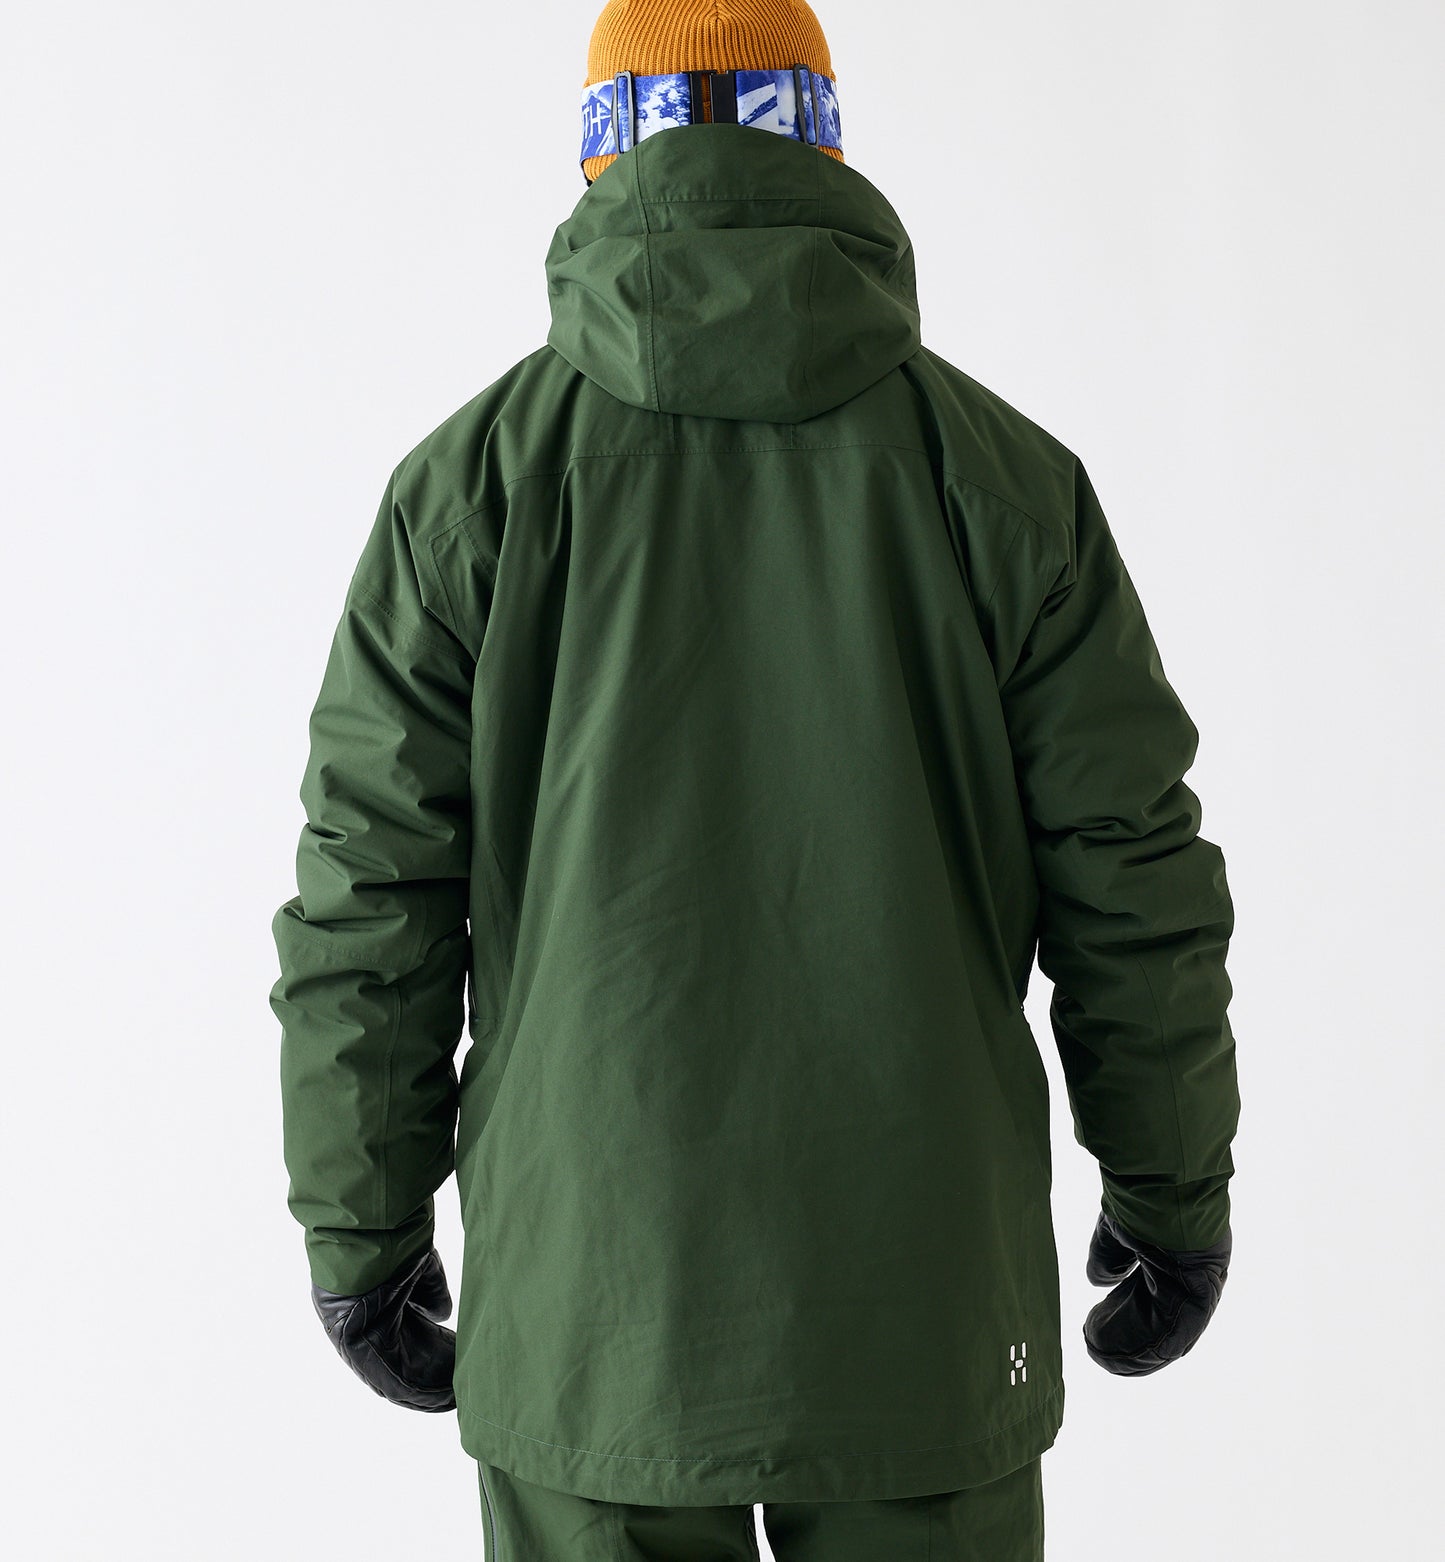 Latnja GTX Insulated Jacket Men